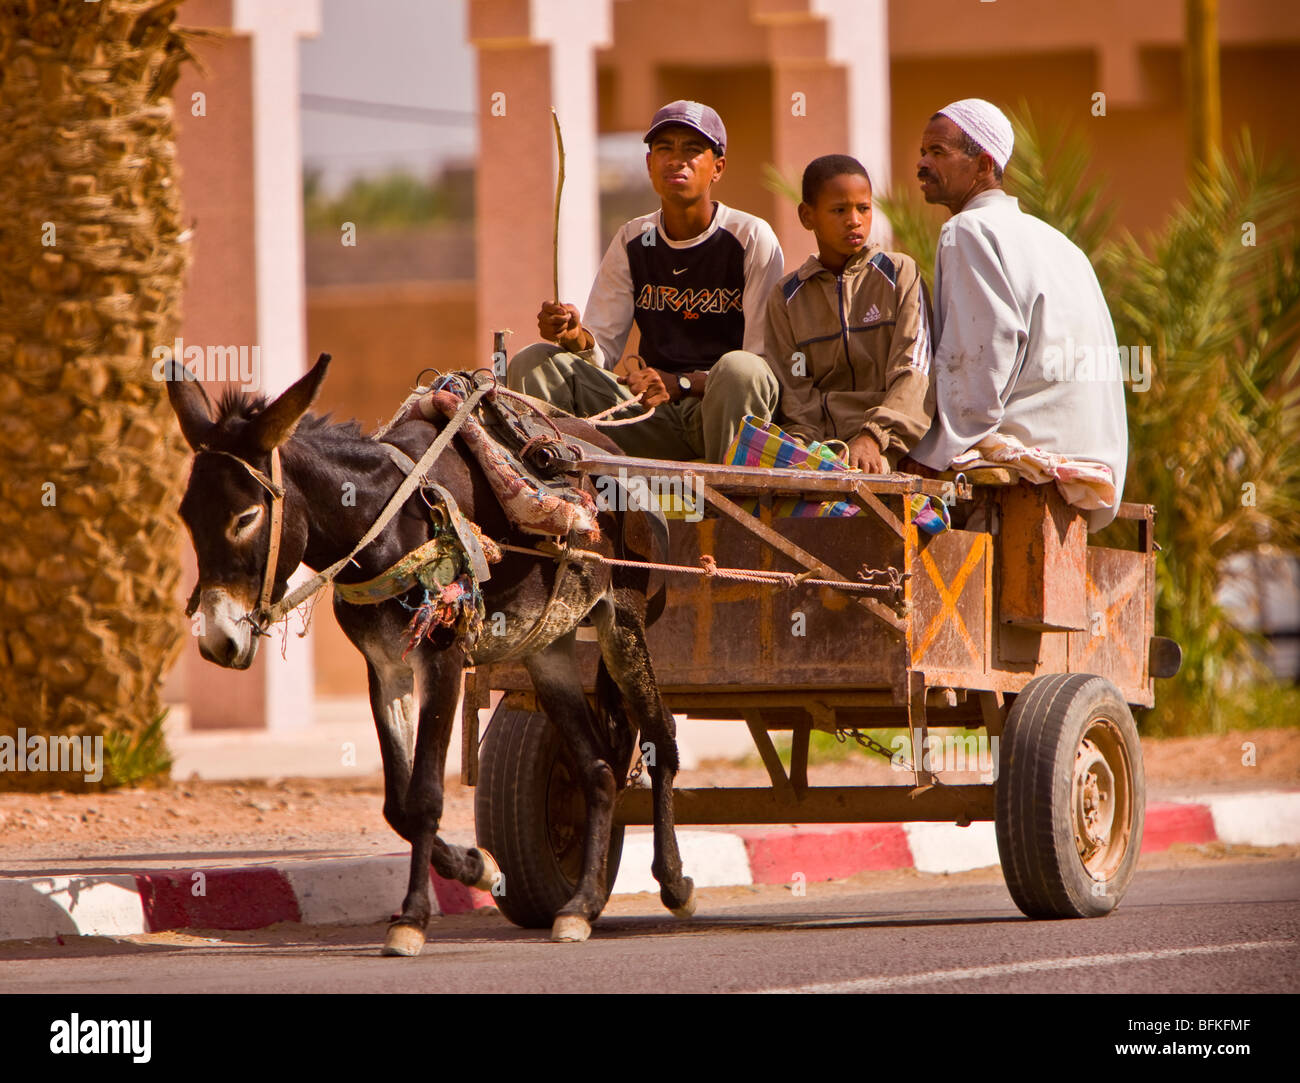 ZAGORA, MAROC - Hommes installés en charrette à âne. Banque D'Images